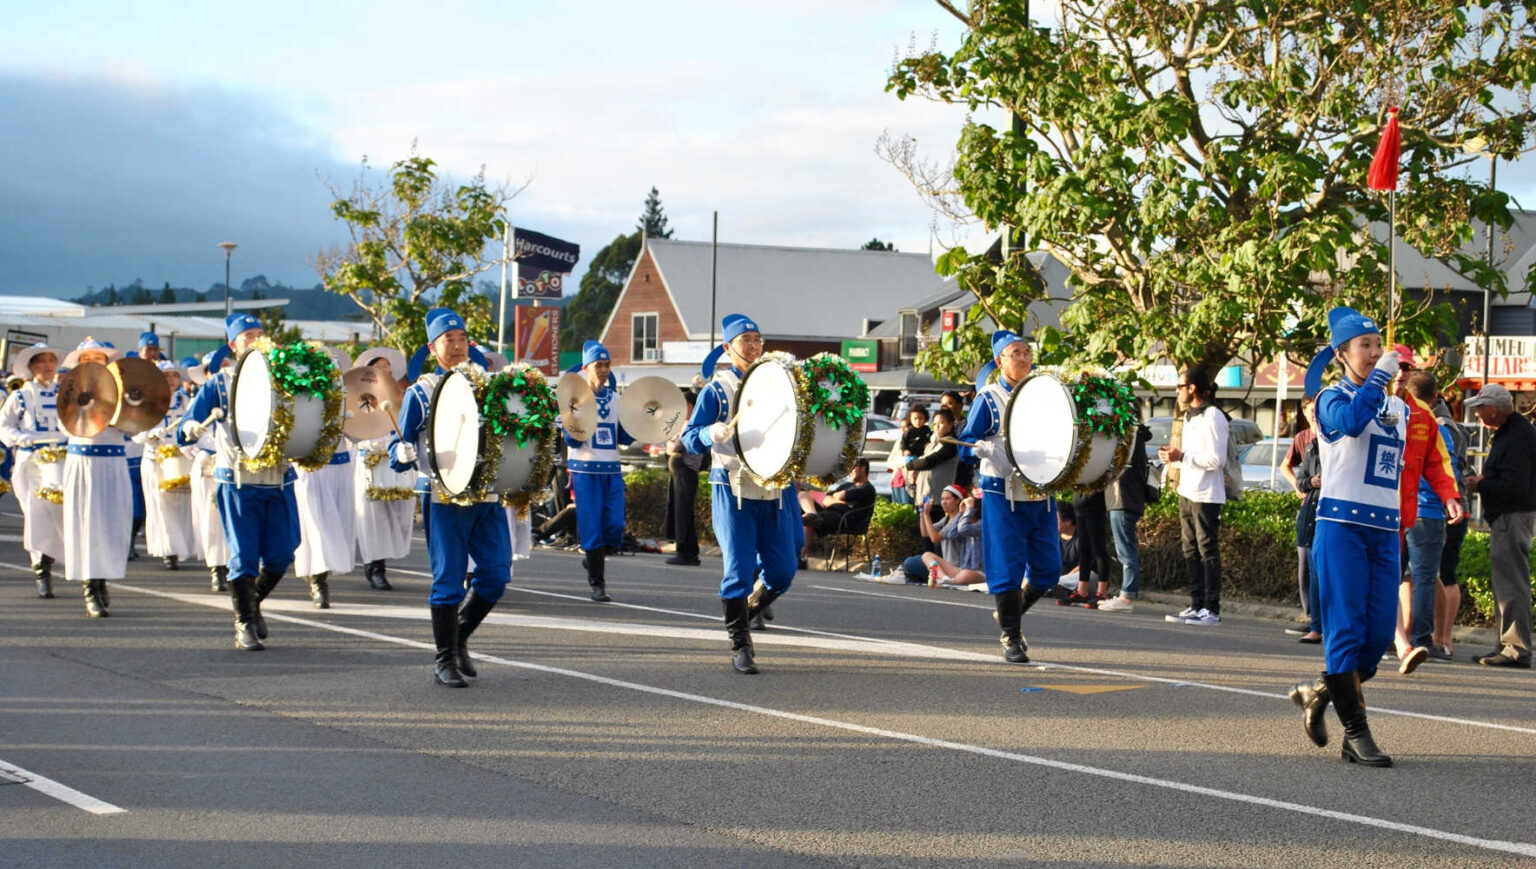 Hari Krishna band marching during a Christmas street parade in Kumeu, Auckland, New Zealand